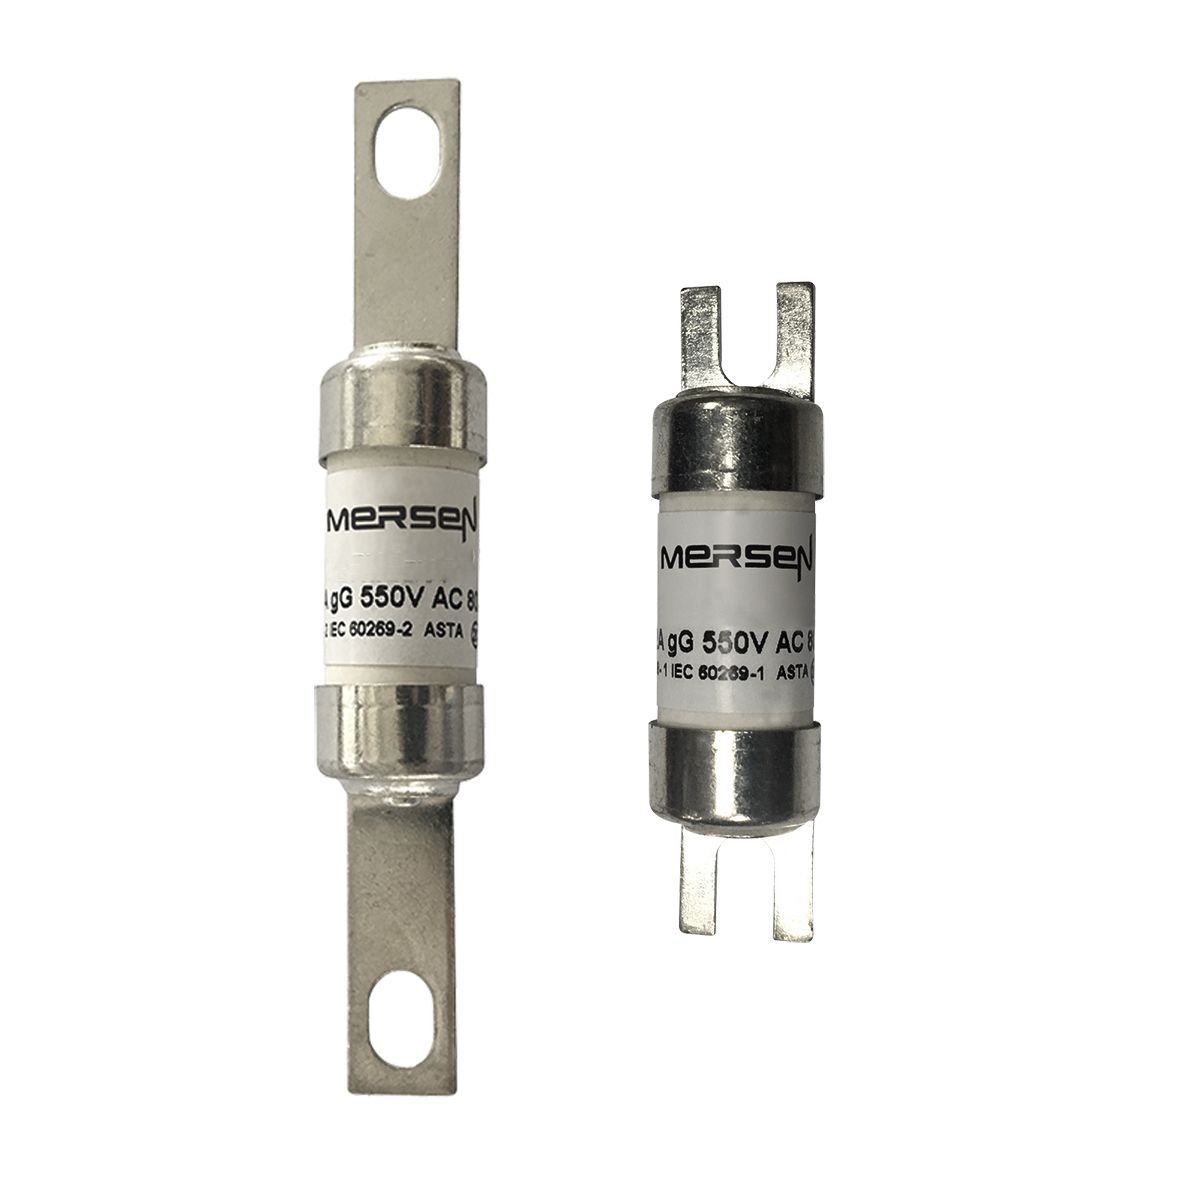 G1006578 - Offset Tag fuse-links gG BNTI 550VAC/250VDC 6A